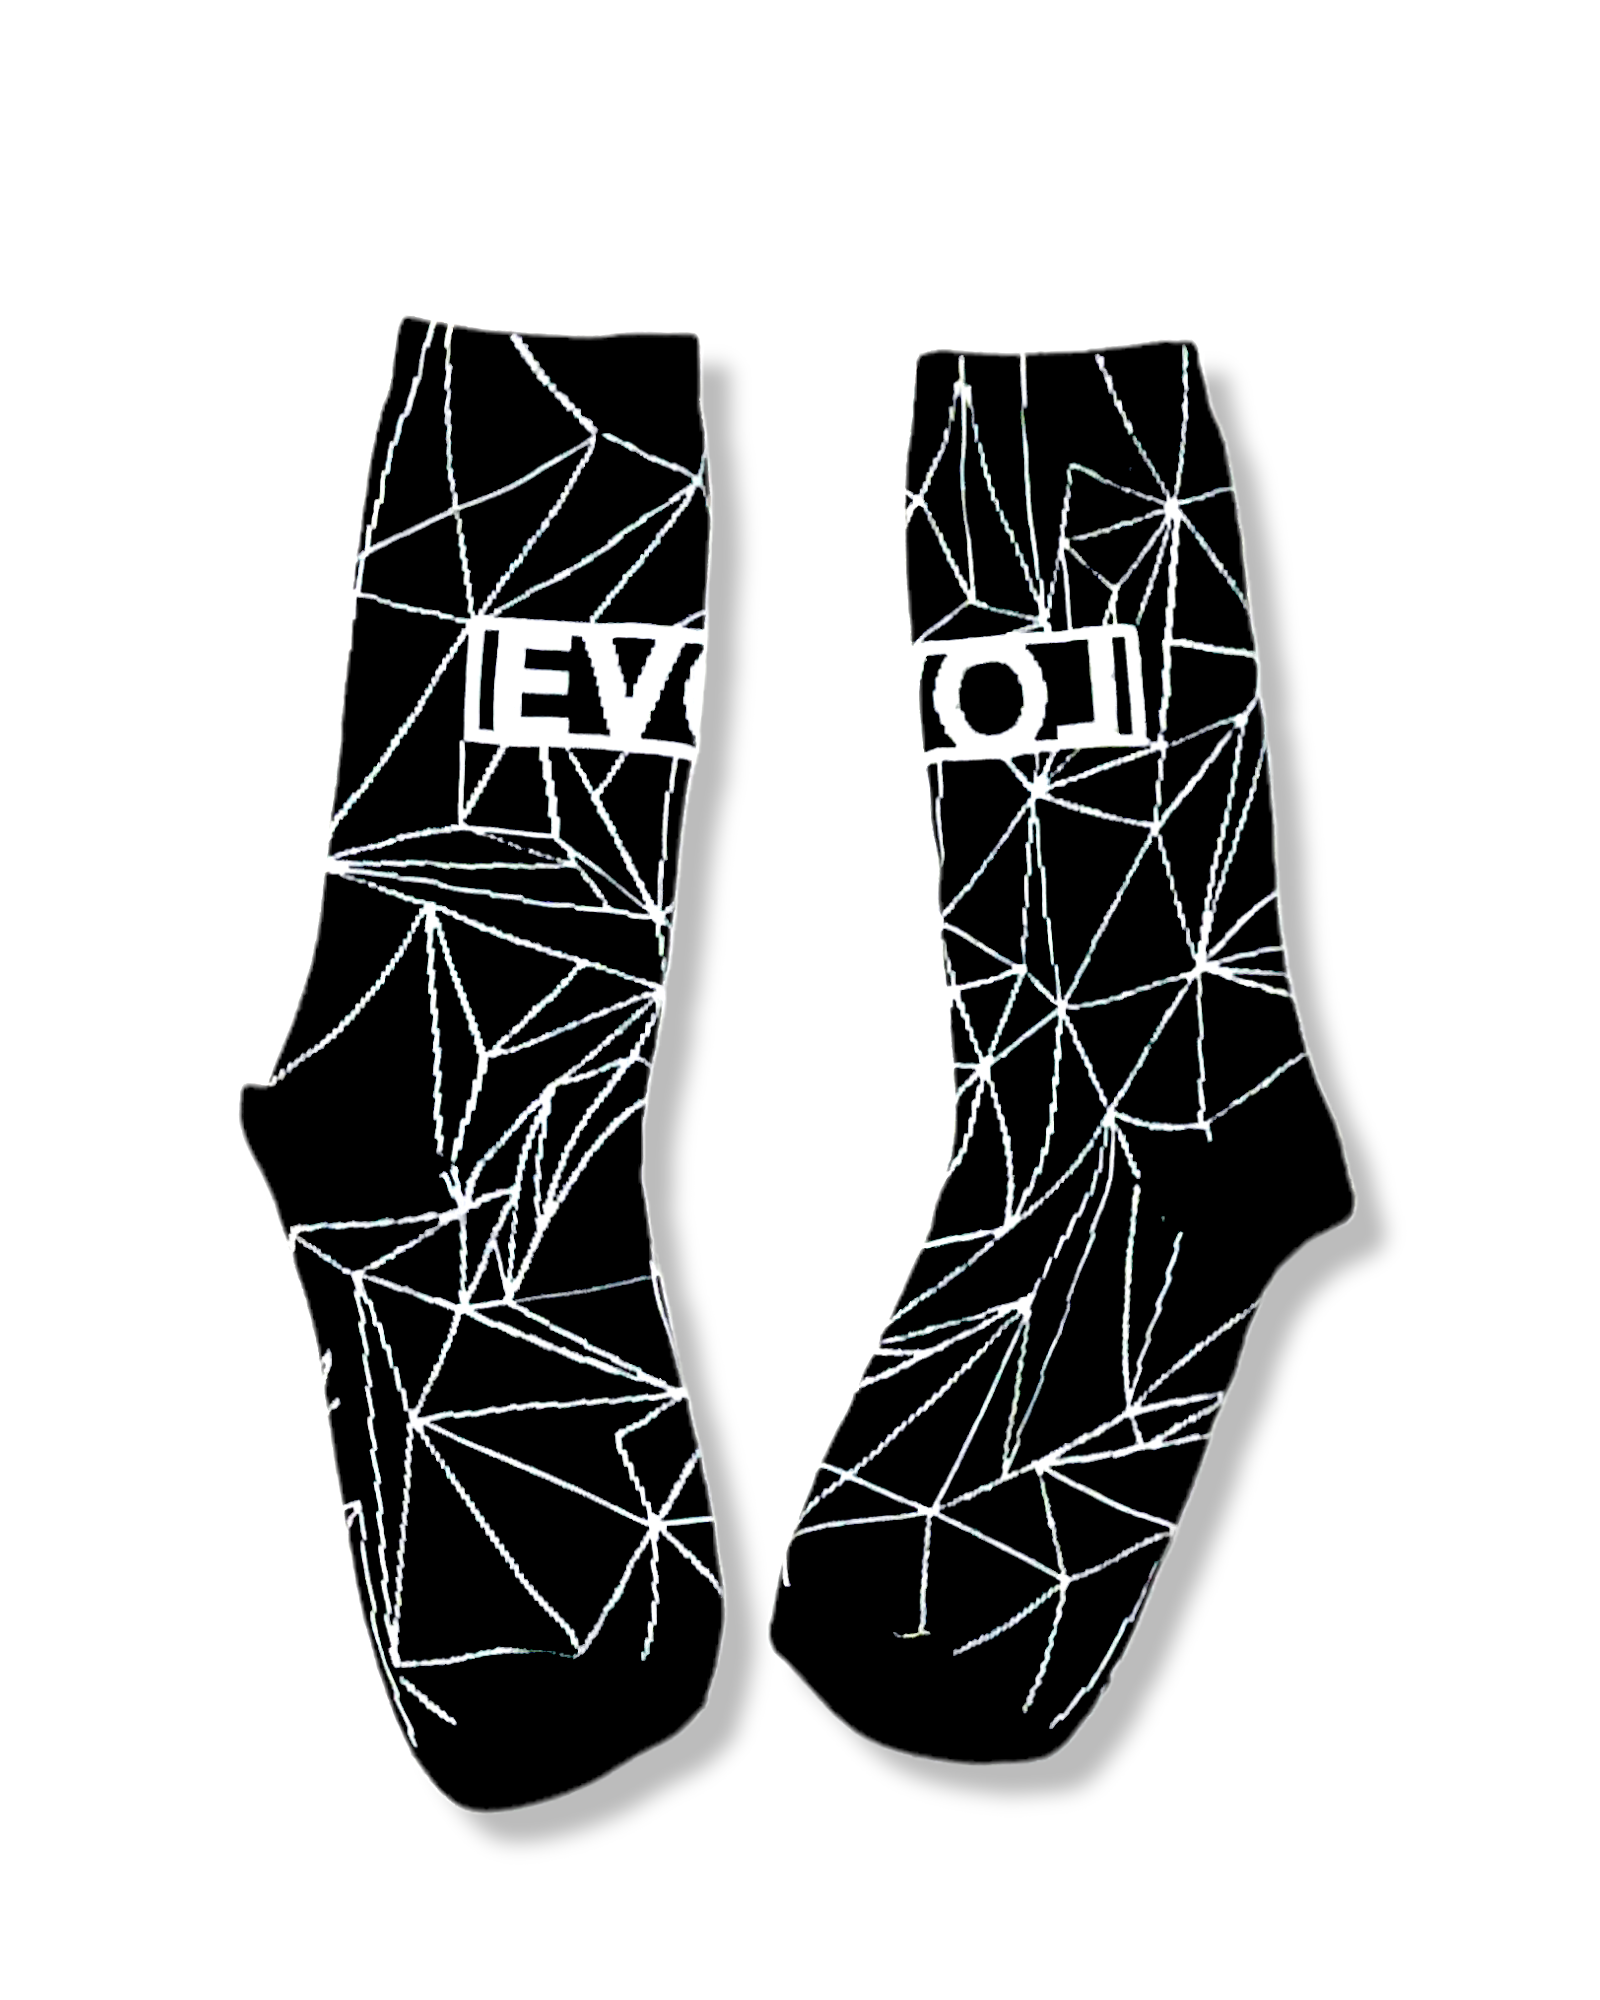 EVOL Socks